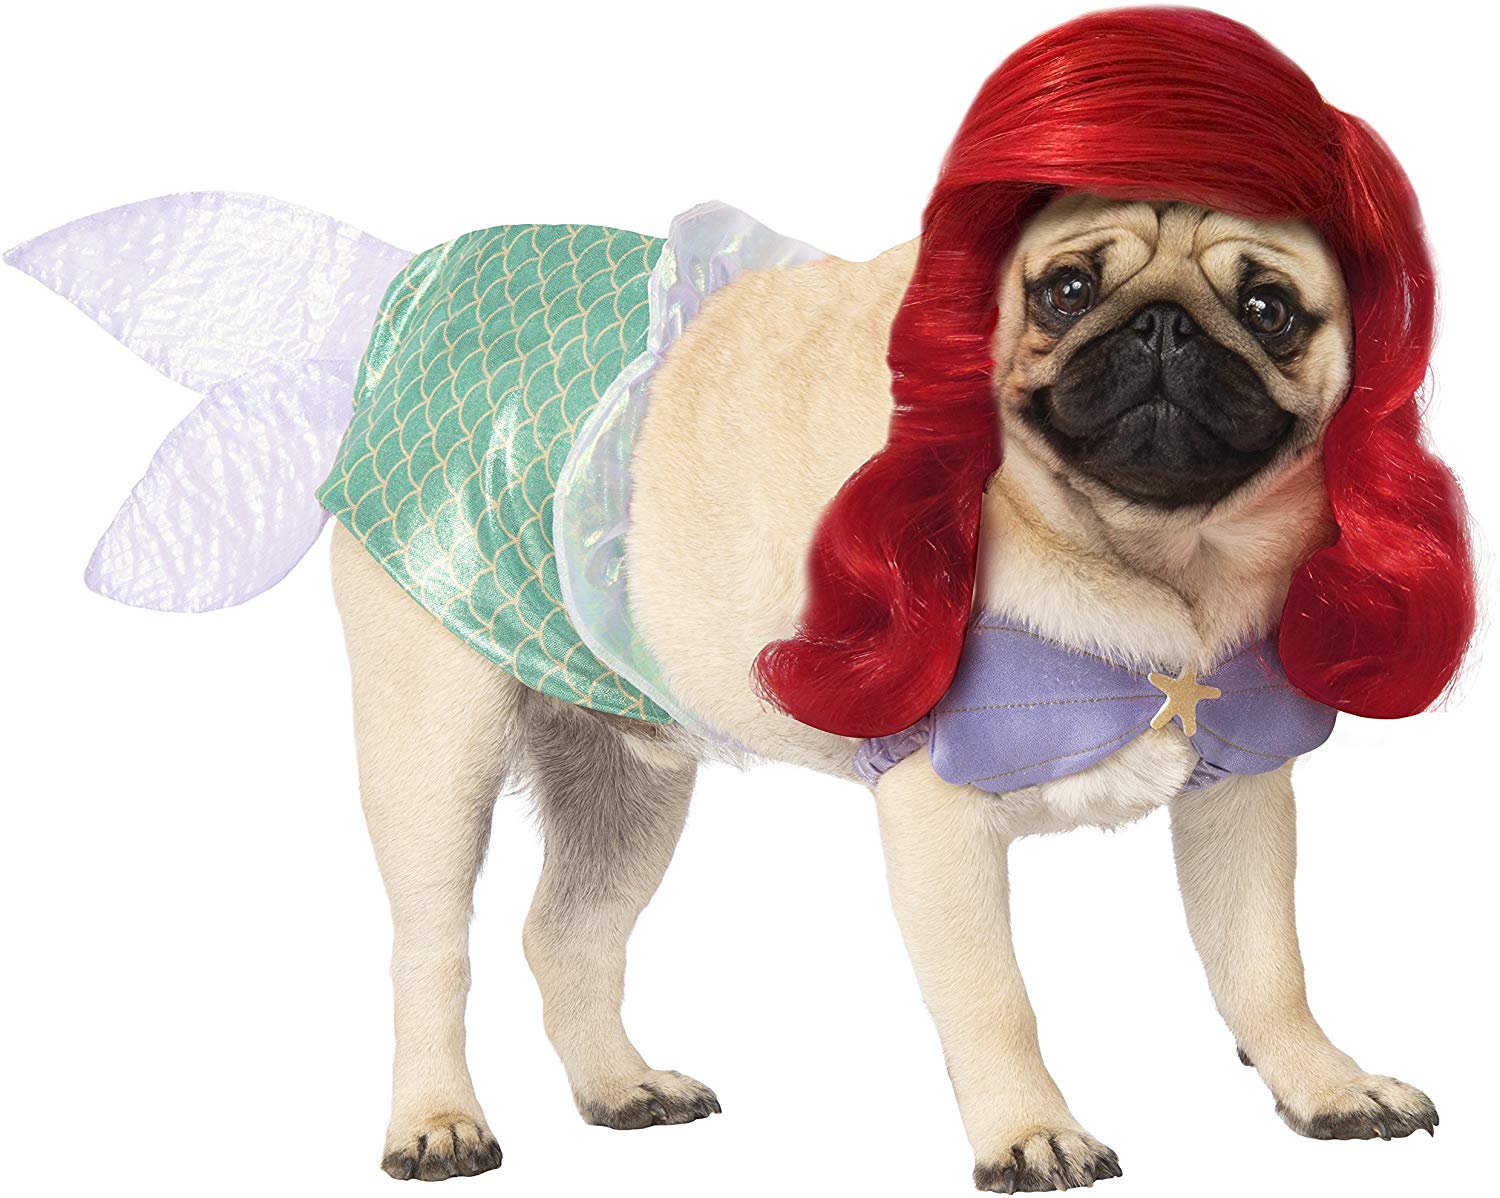 10 ideas para disfrazar a tu perro este Halloween (+fotos) - 24 Horas